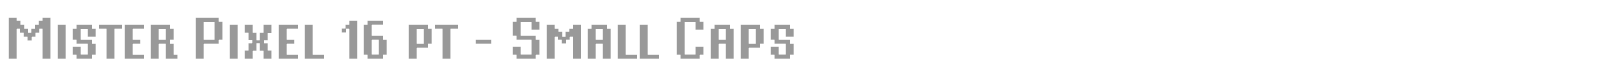 Mister Pixel 16 pt - Small Caps font preview